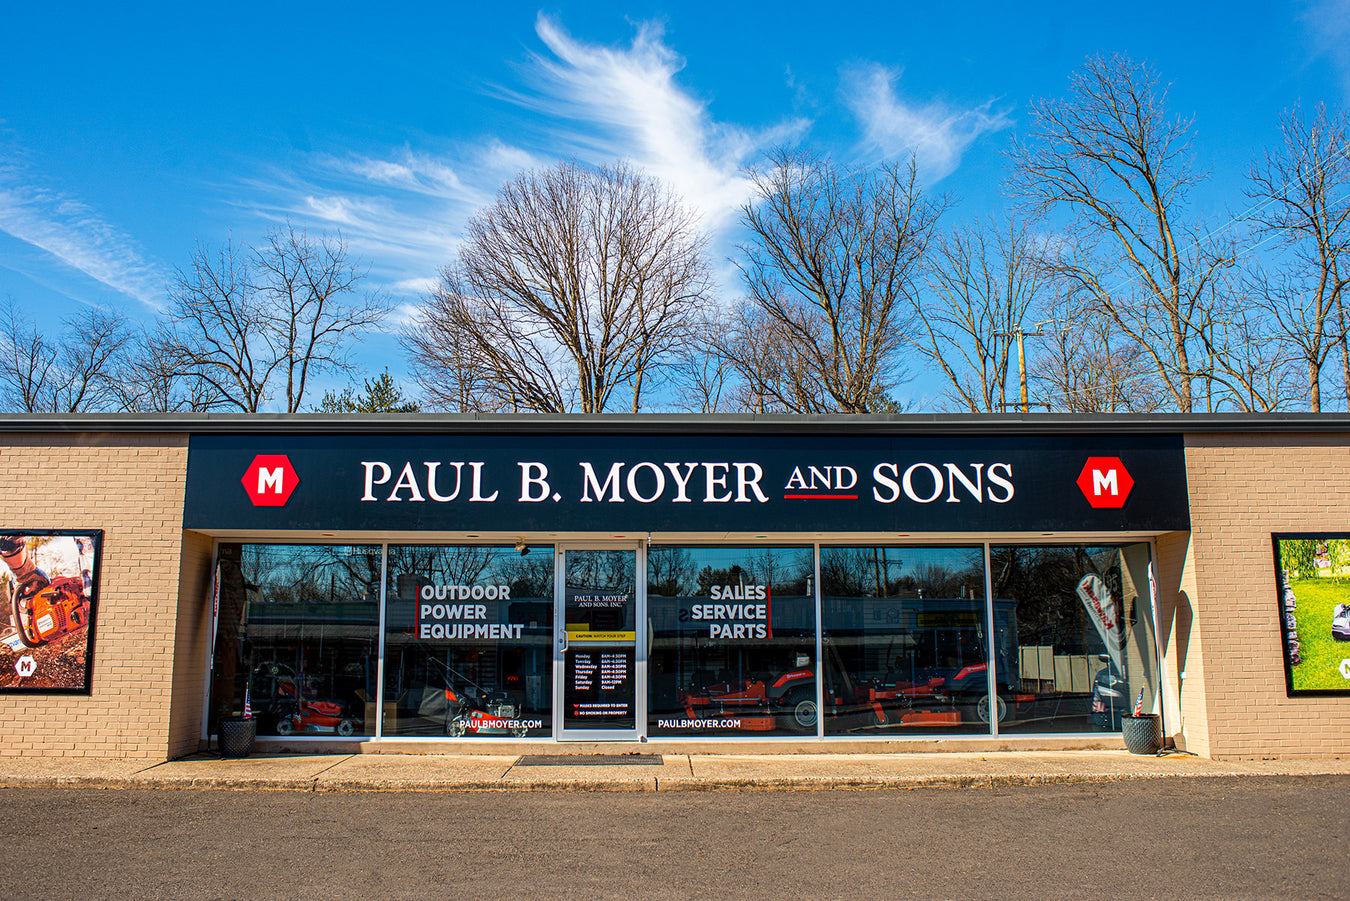 Paul B. Moyer & Sons Showroom in Doylestown, PA